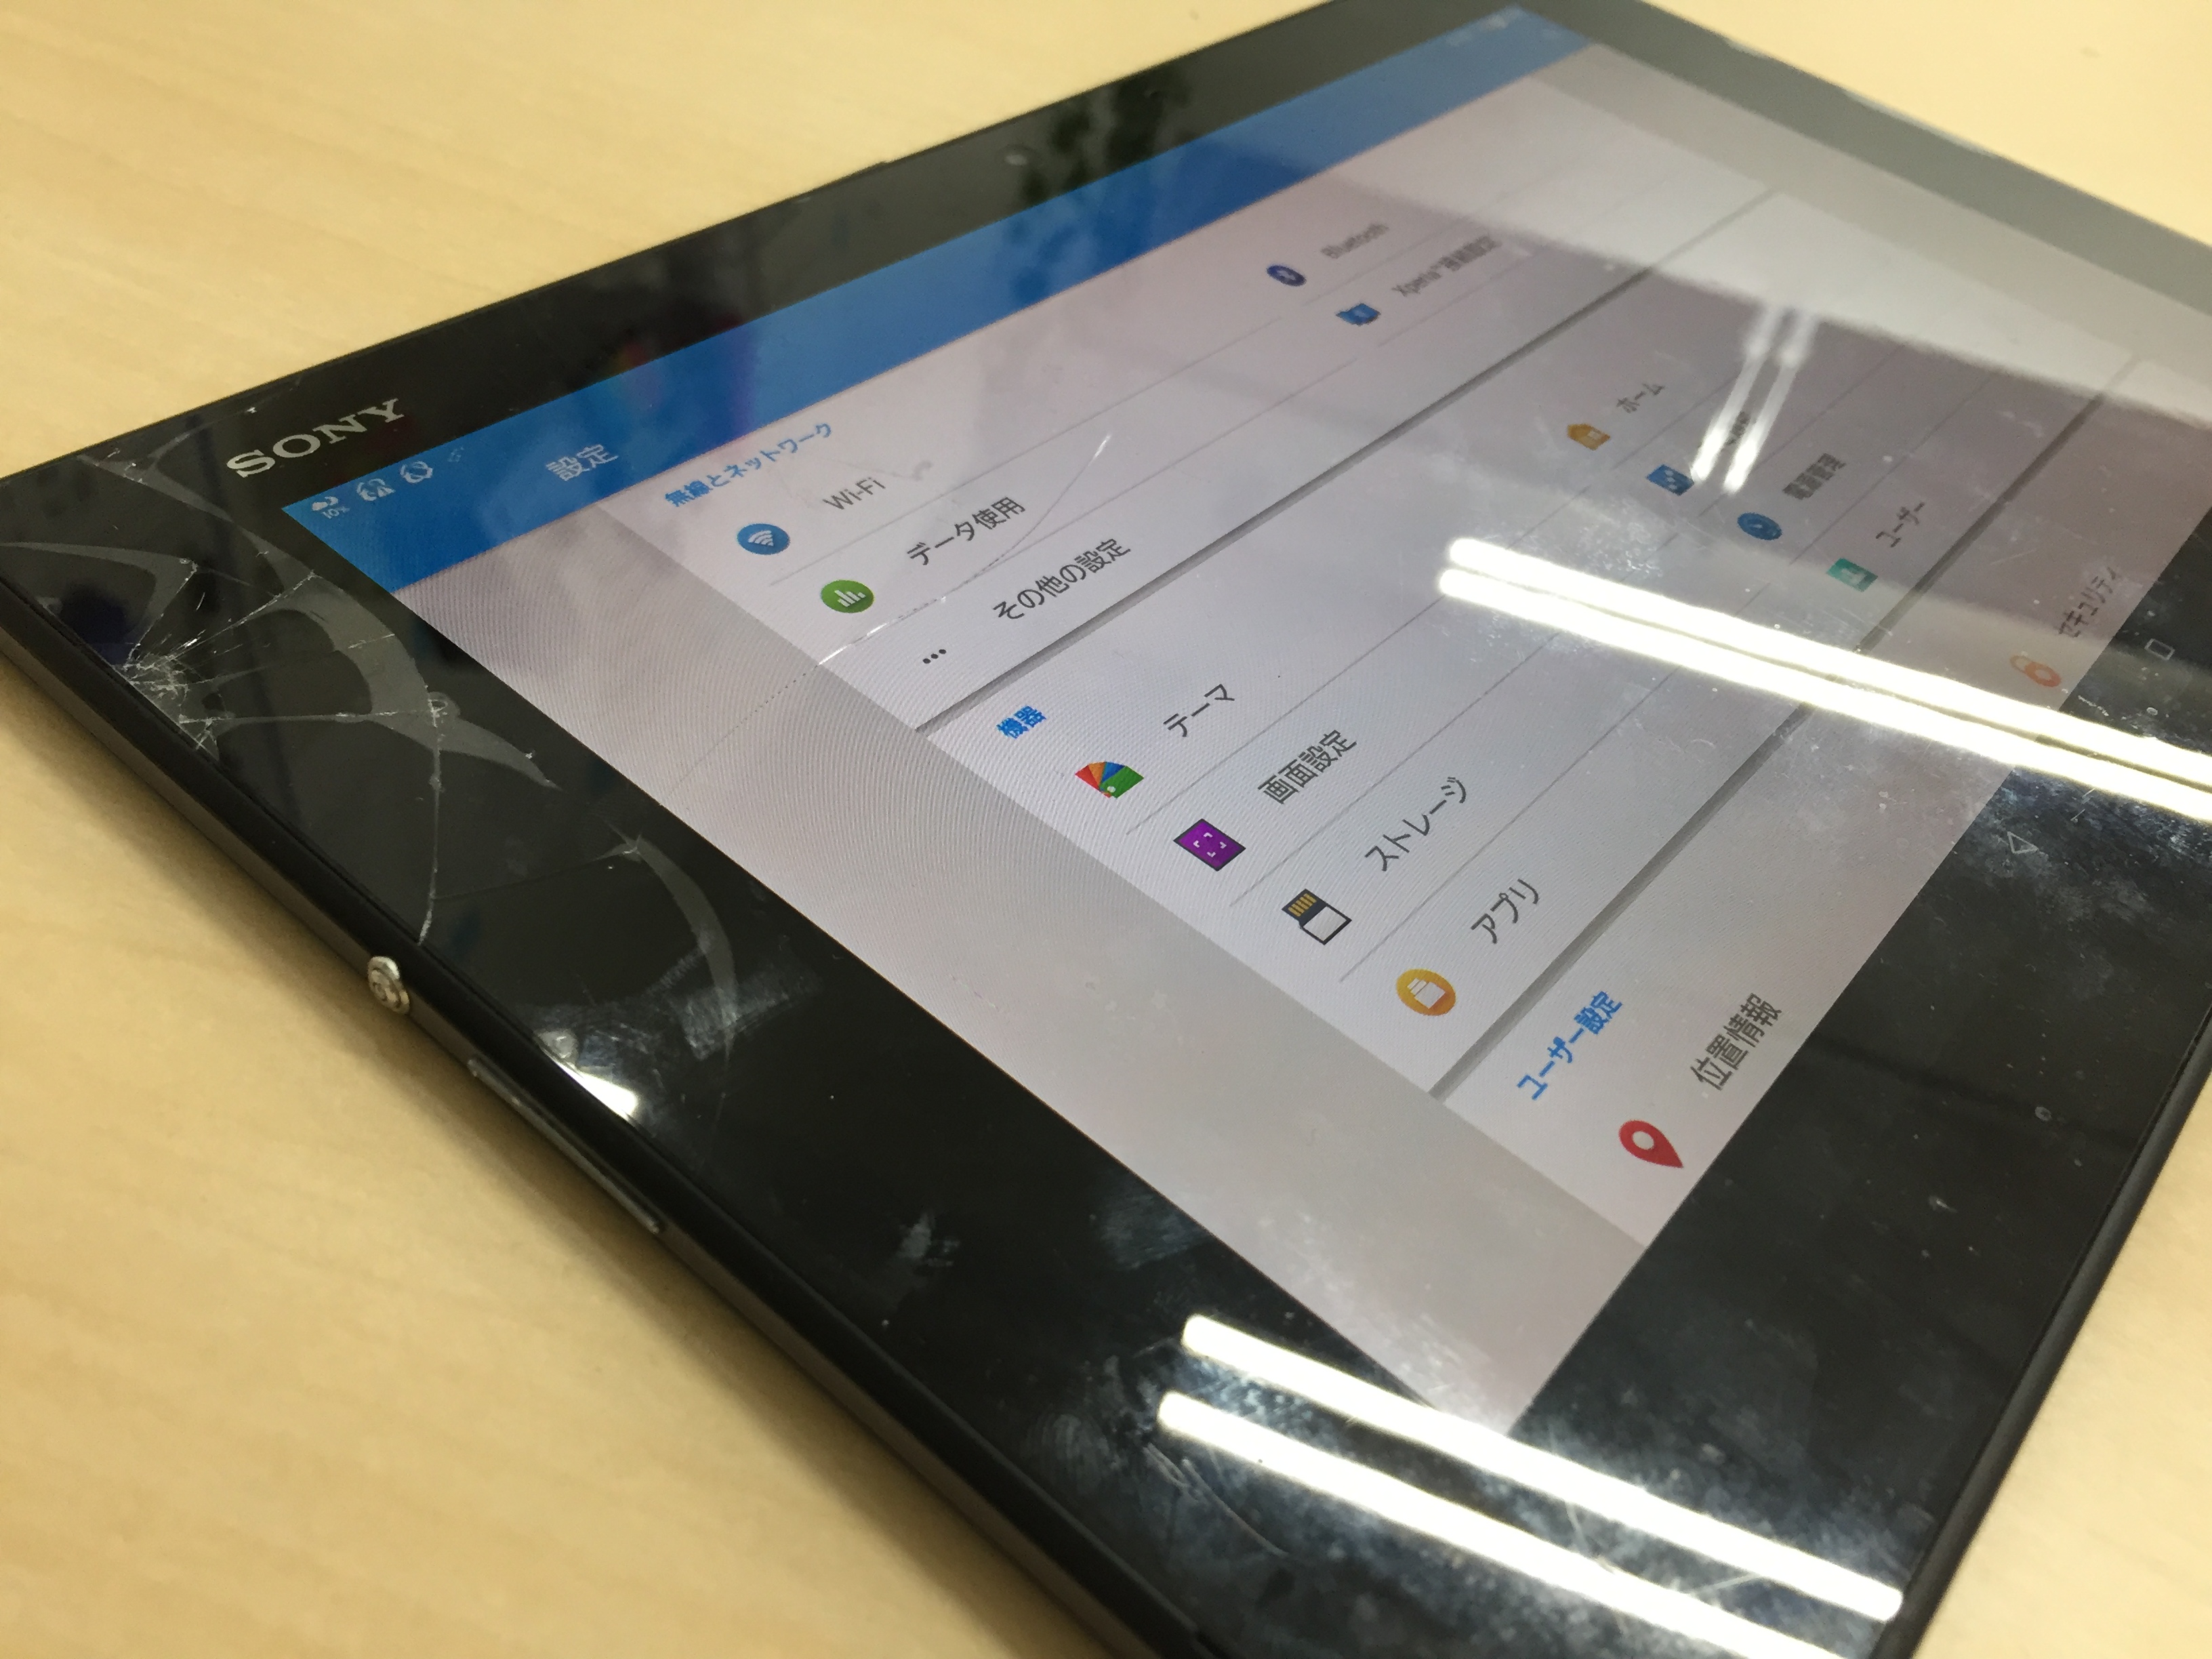 Xperia Z2 Tablet 割れて操作がうまくできない画面も交換可能 Xperia Galaxy Aquos Zenfone Huawei修理のアンドロイドホスピタル